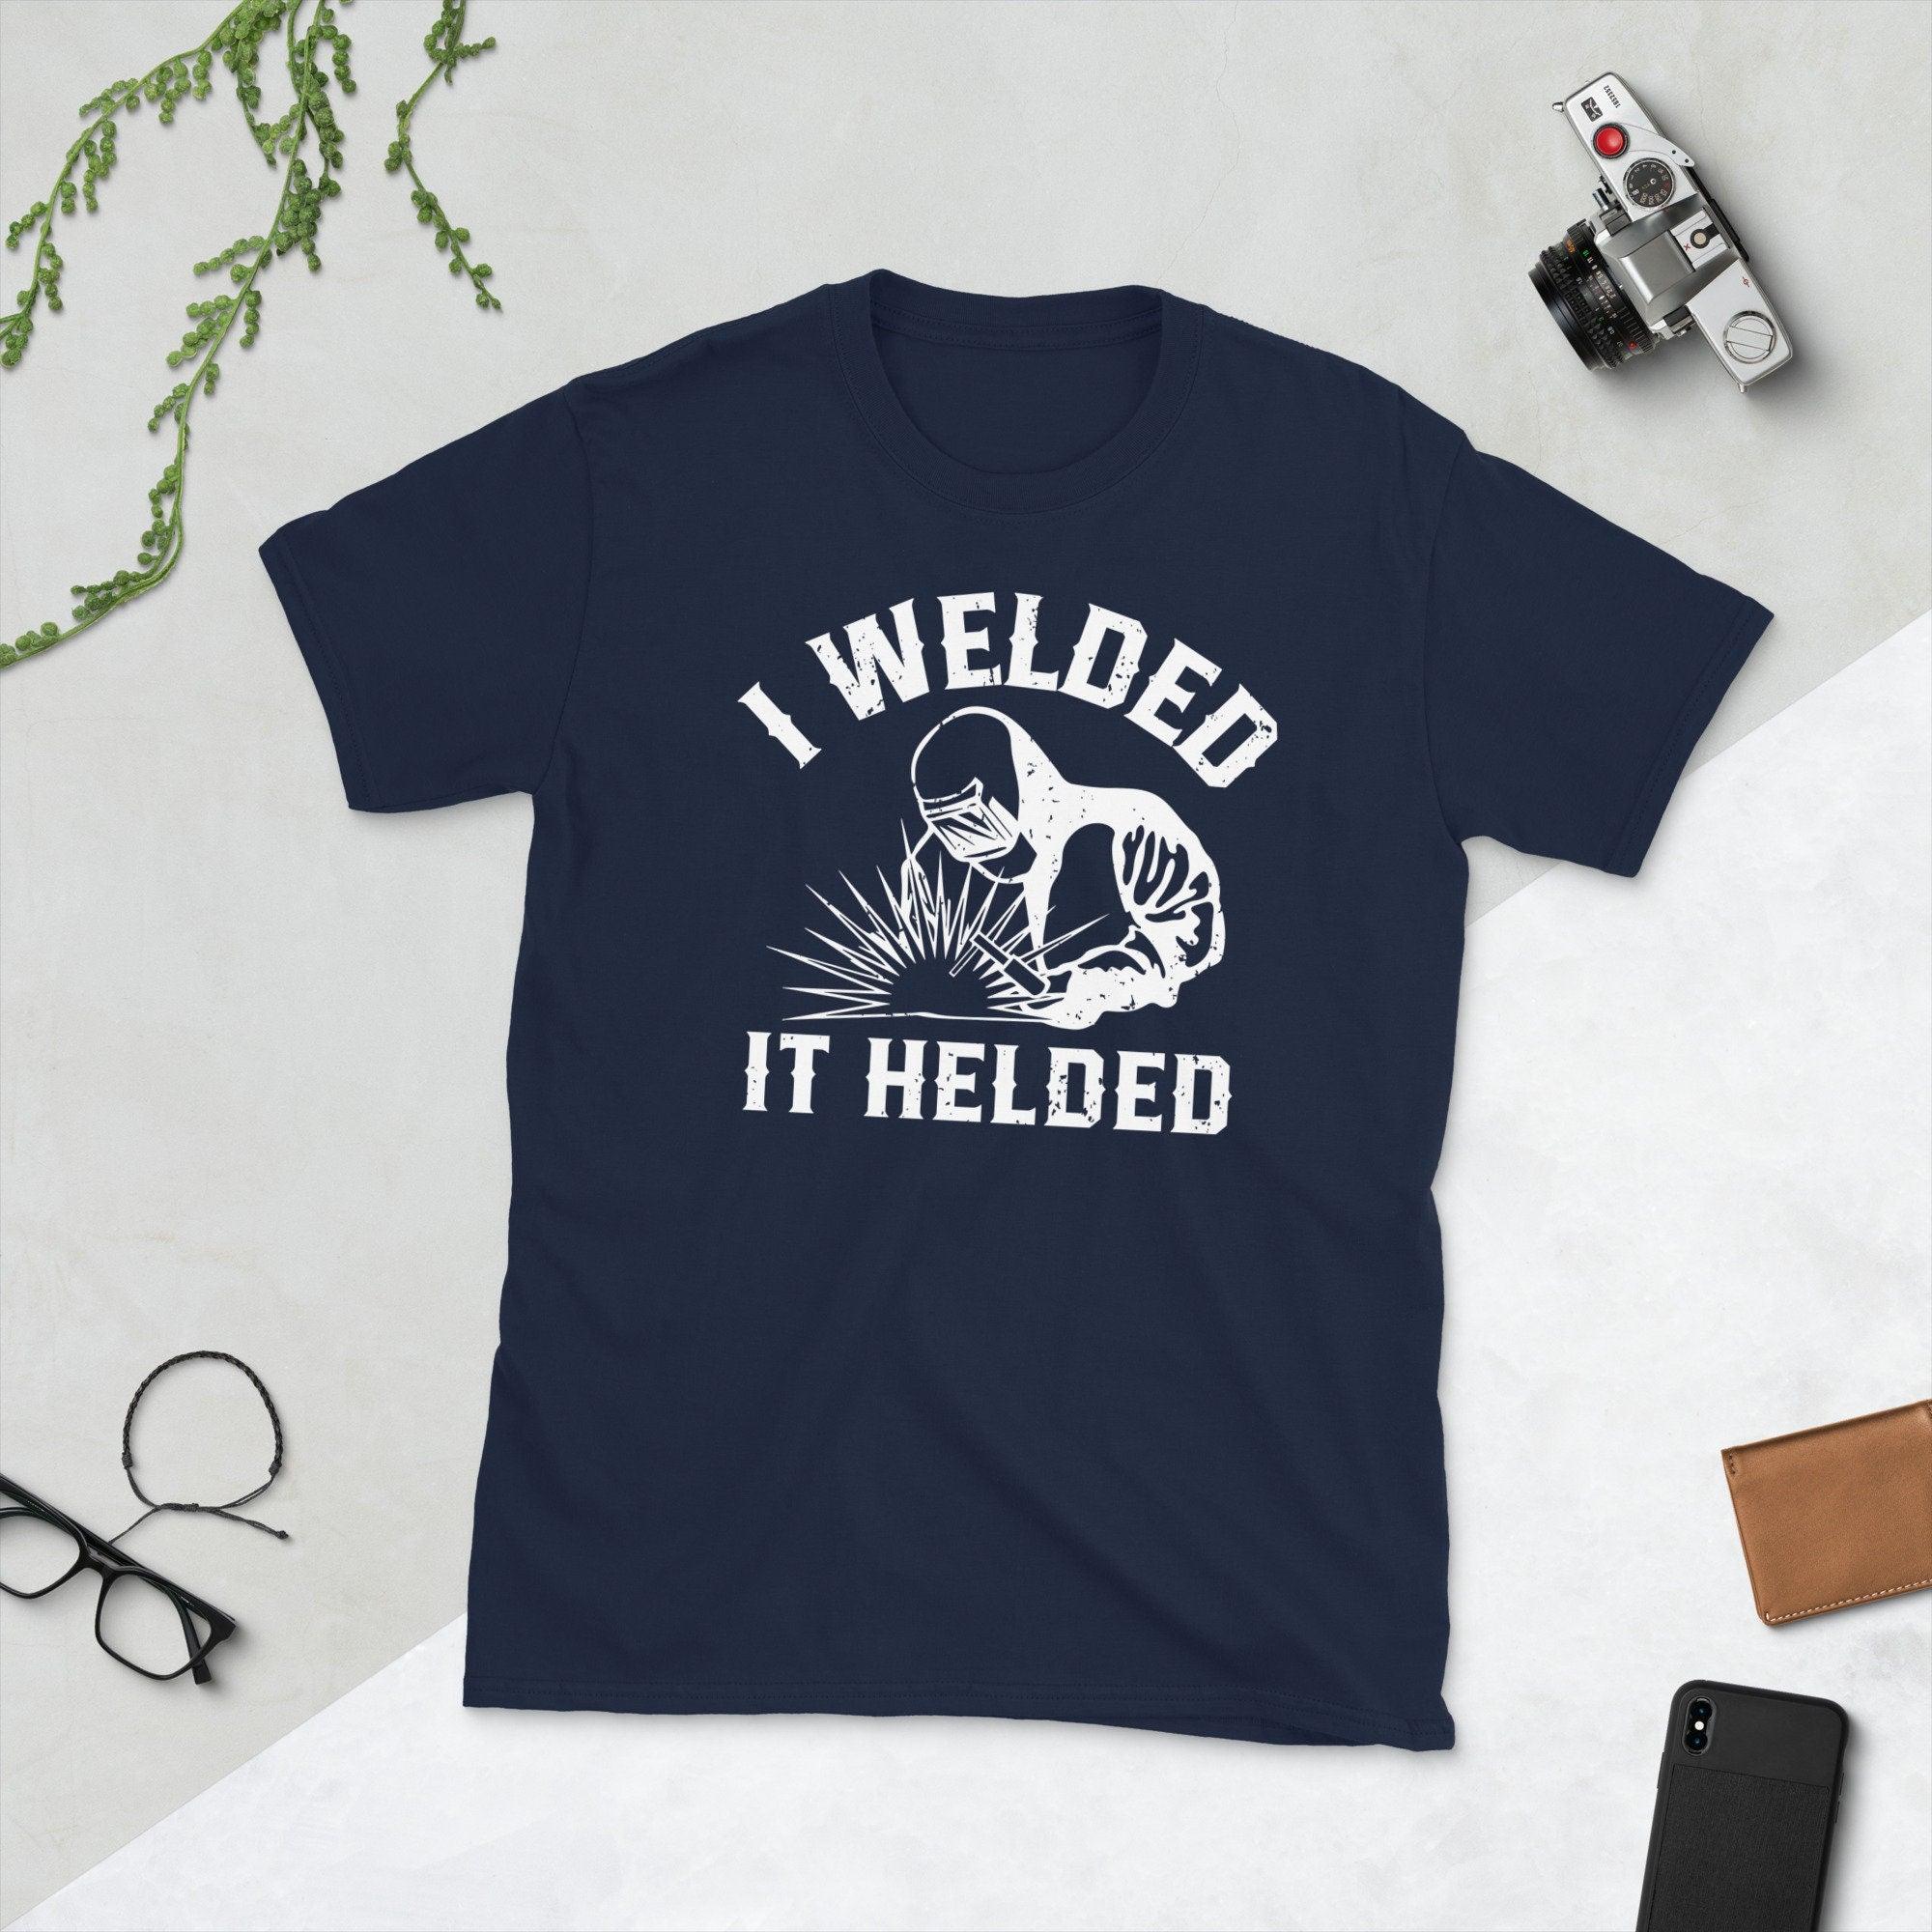 I Welded It Holded, футболка унисекс Welder, футболка Welder Gift Fun Retro со сварочным силуэтом - plusminusco.com